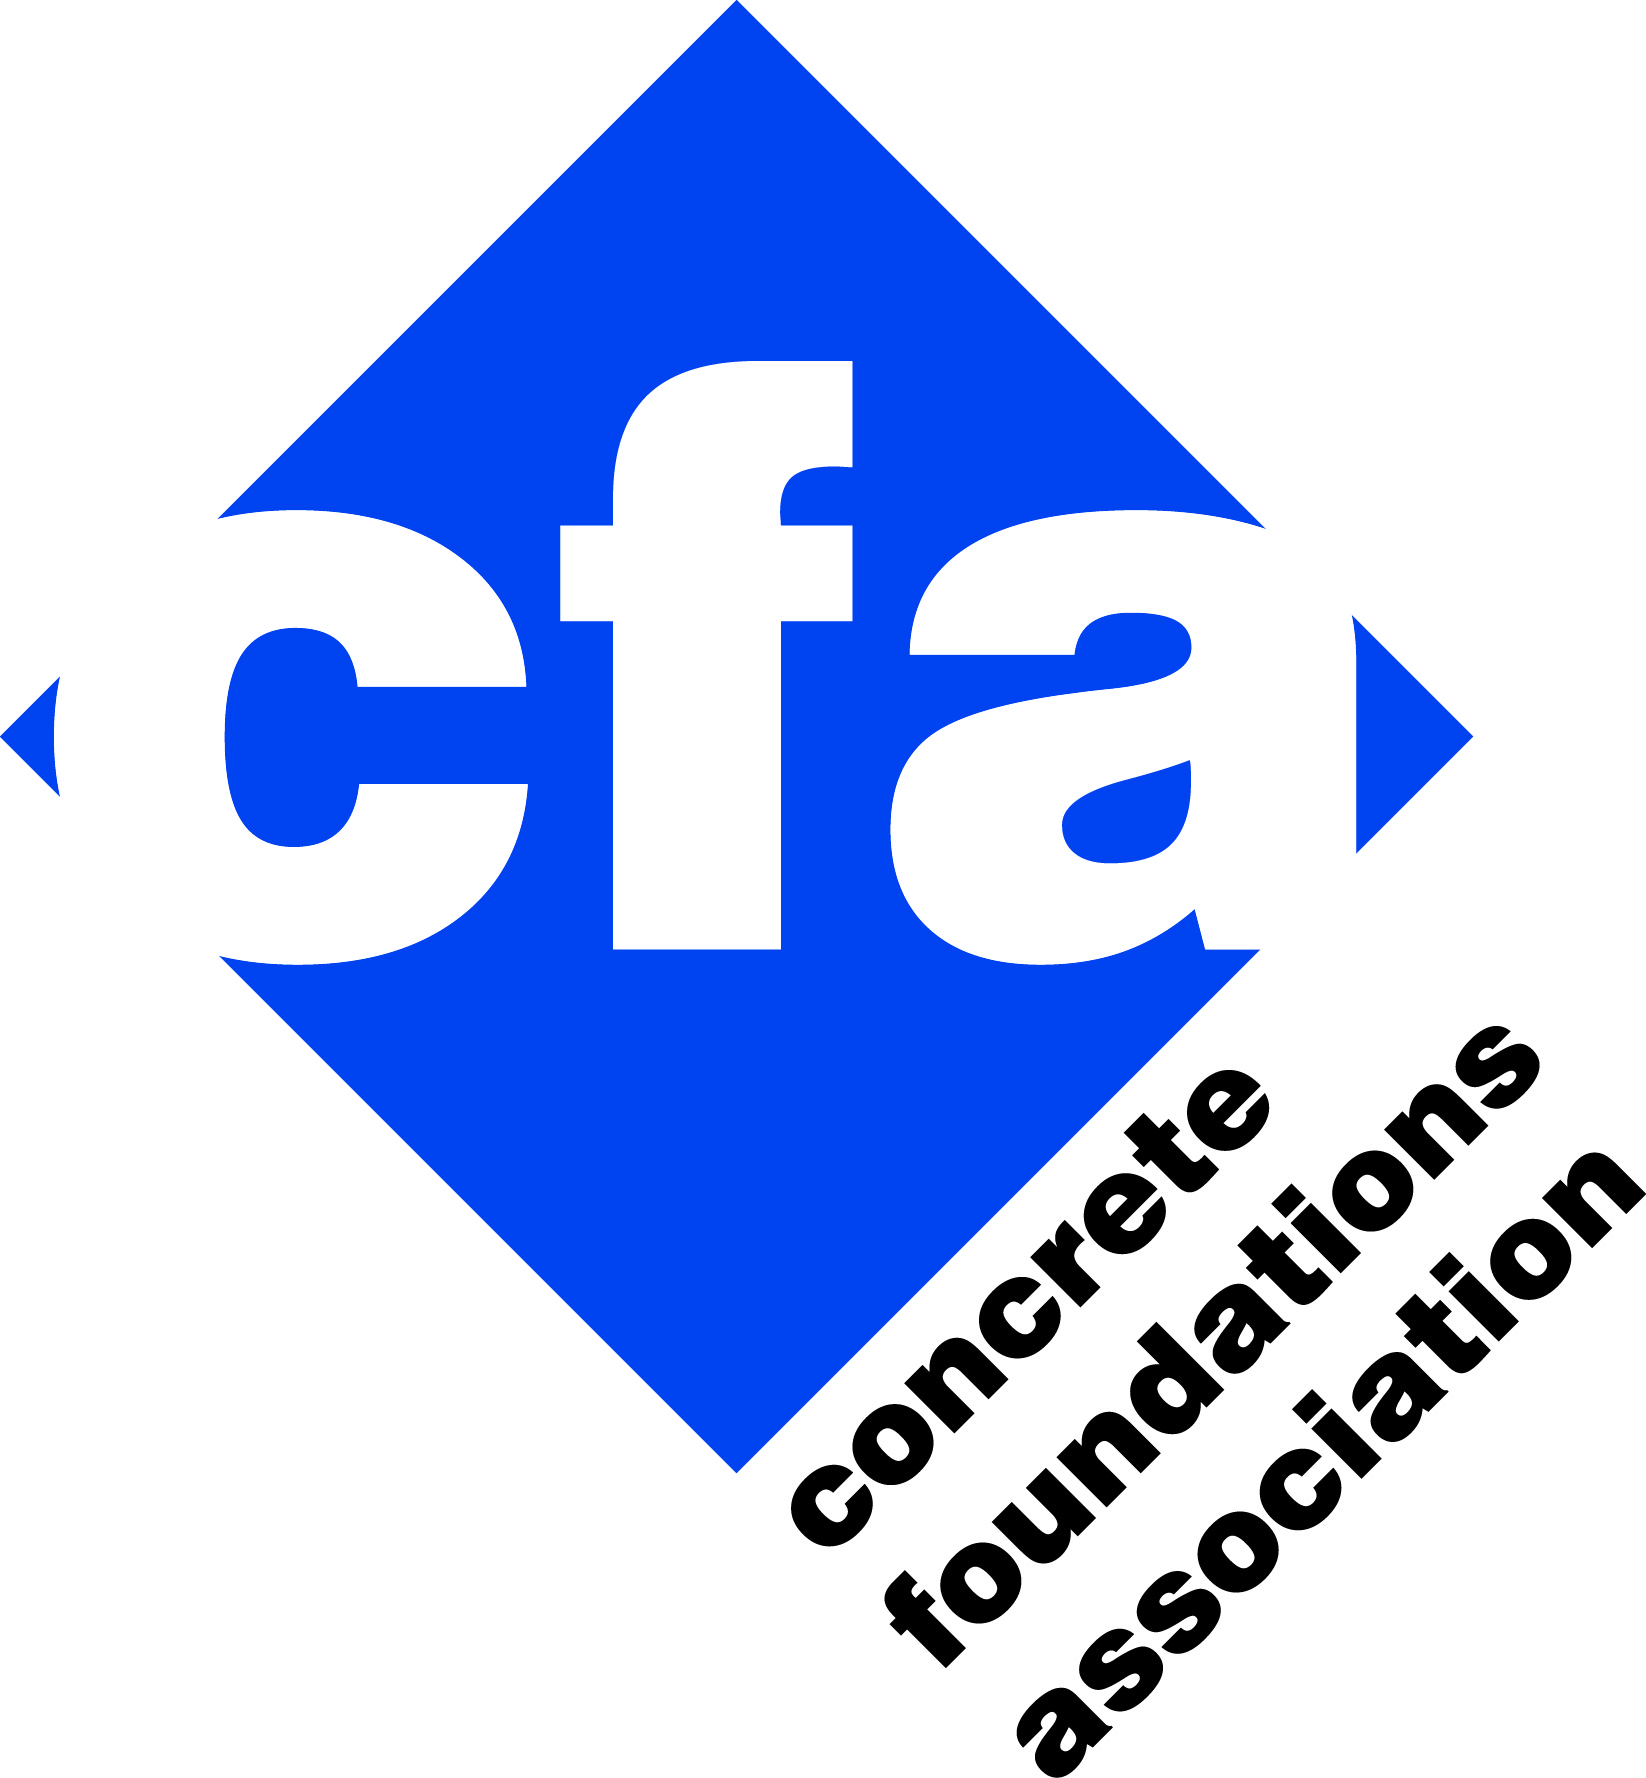 cfa logo 2012 (color)